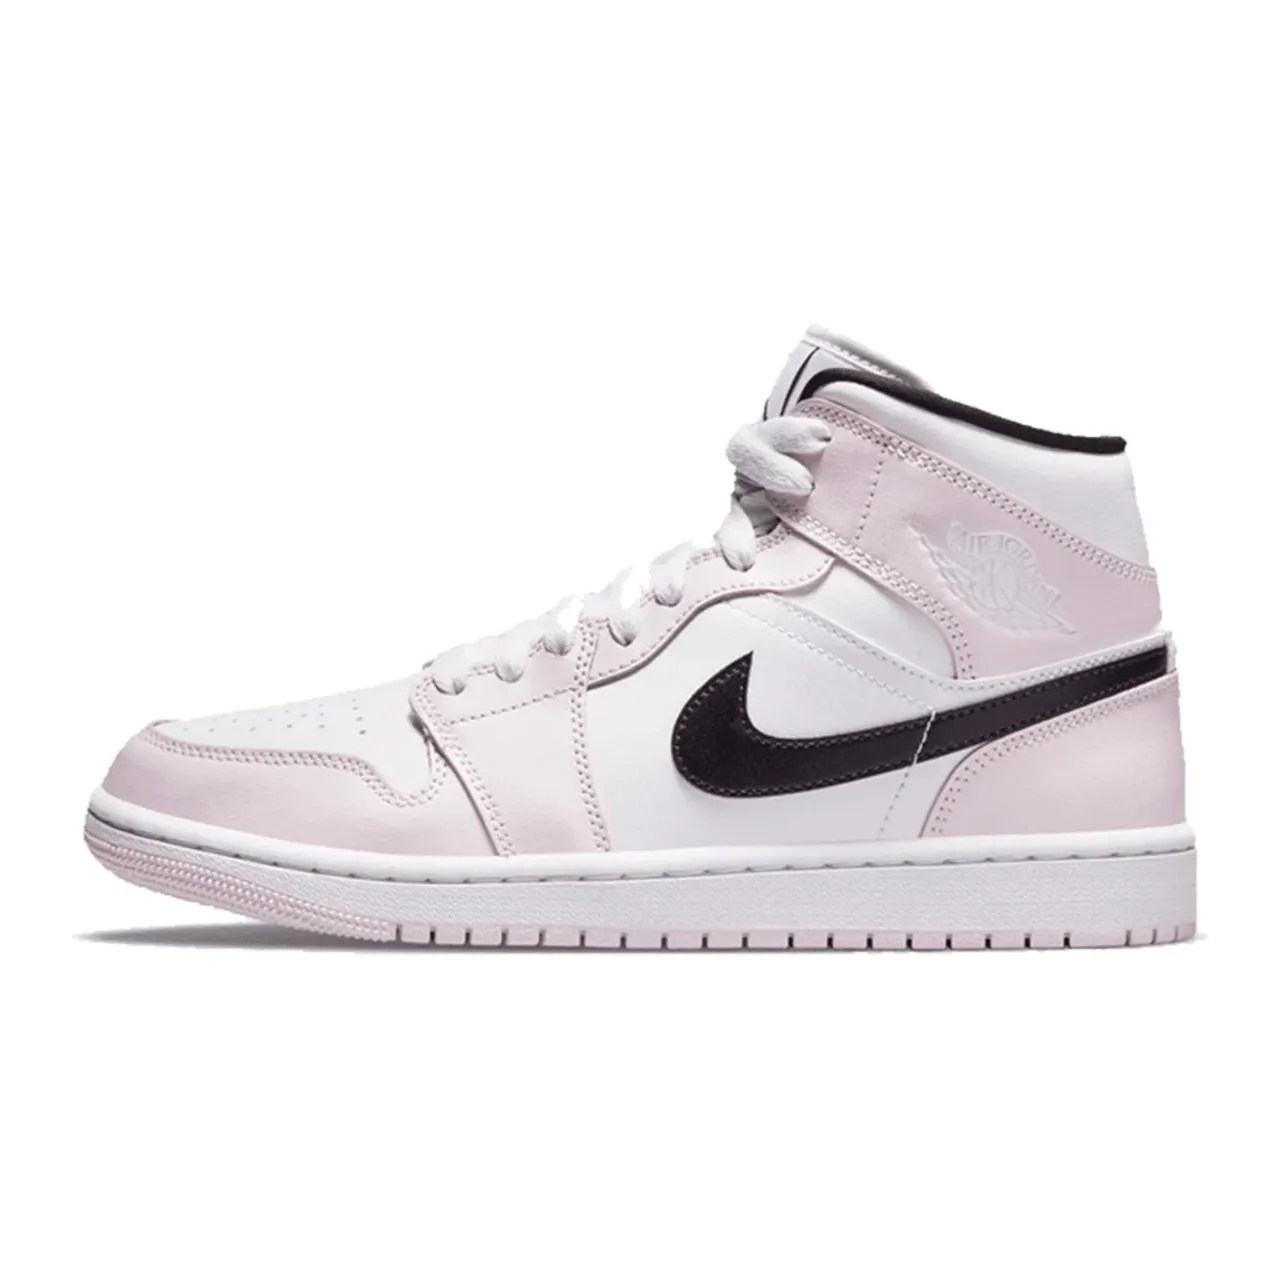 Mid Sneakers, Style ID: Bq6472-500 Jordan